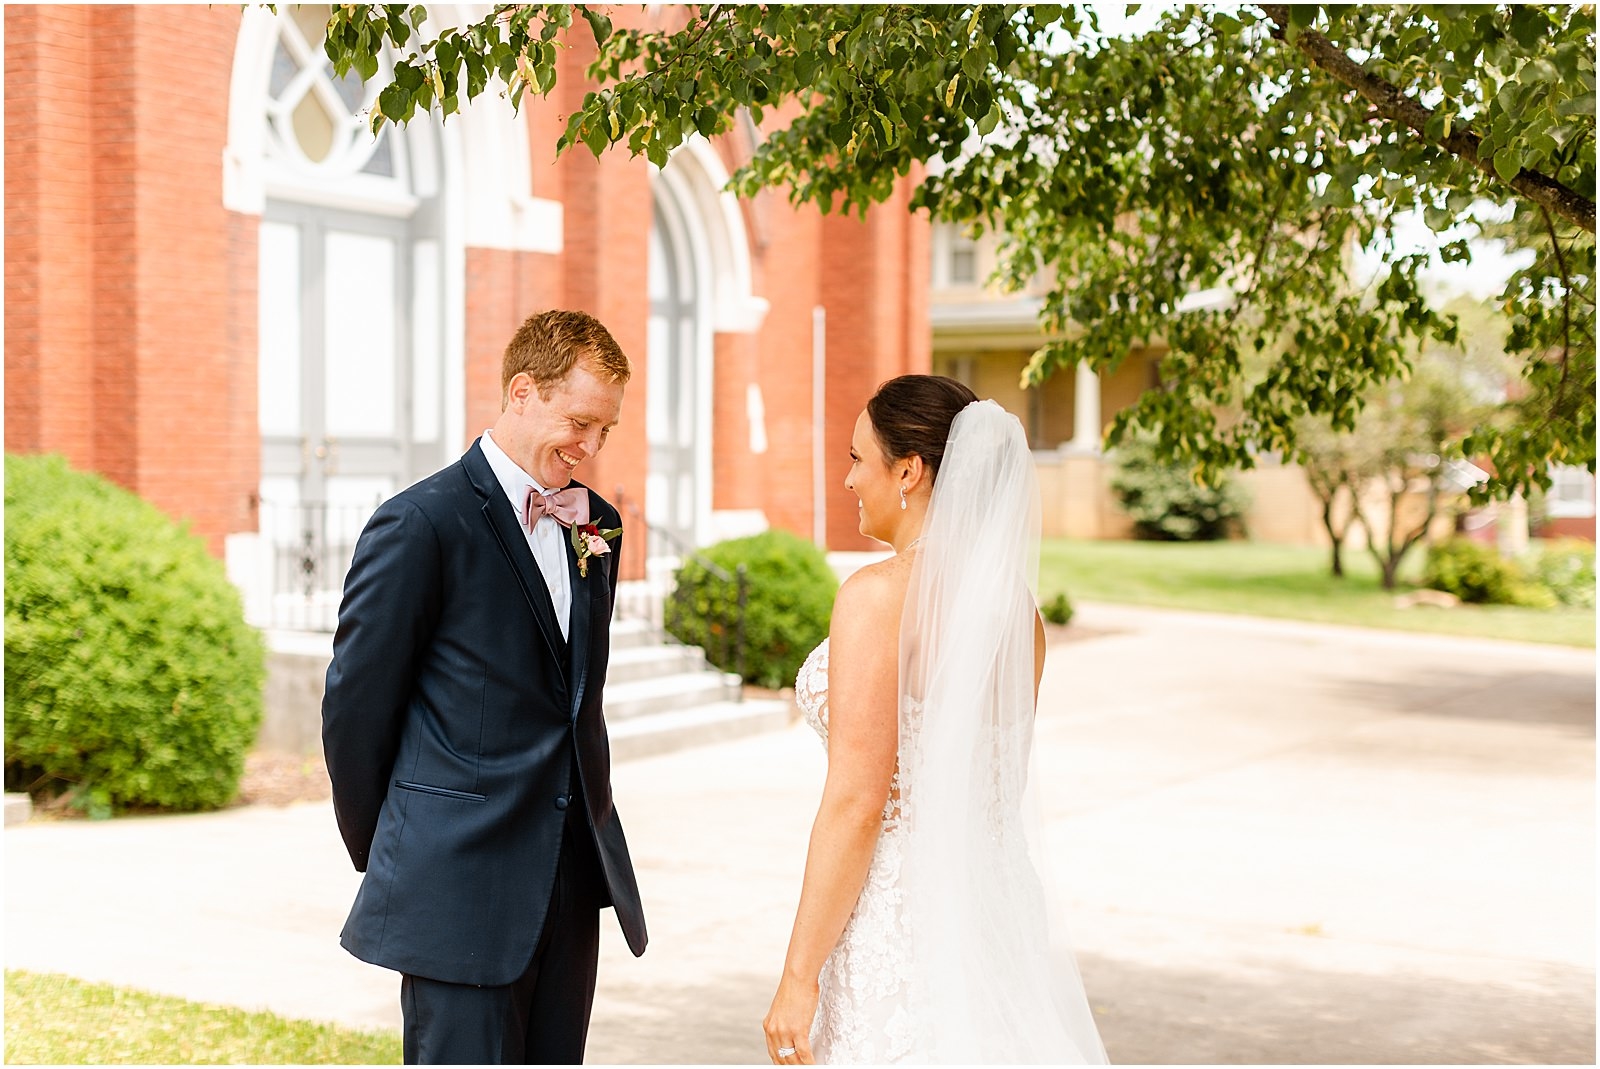 Deidra and Andrew | A Huntingburgh Indiana Wedding Bret and Brandie | Evansville Photographers | @bretandbrandie-0045.jpg